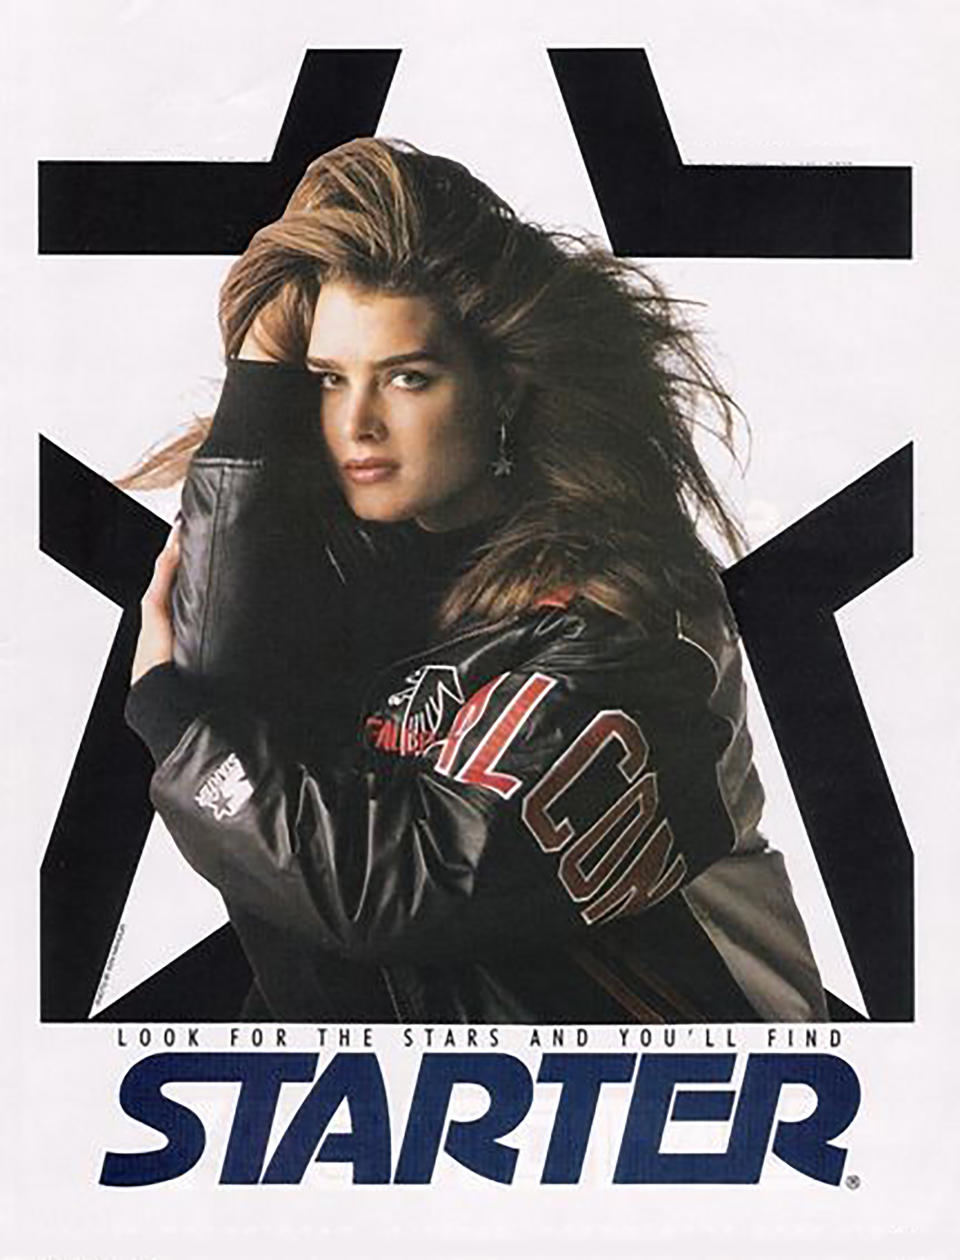 Brooke Shields appears in ads for Starter.